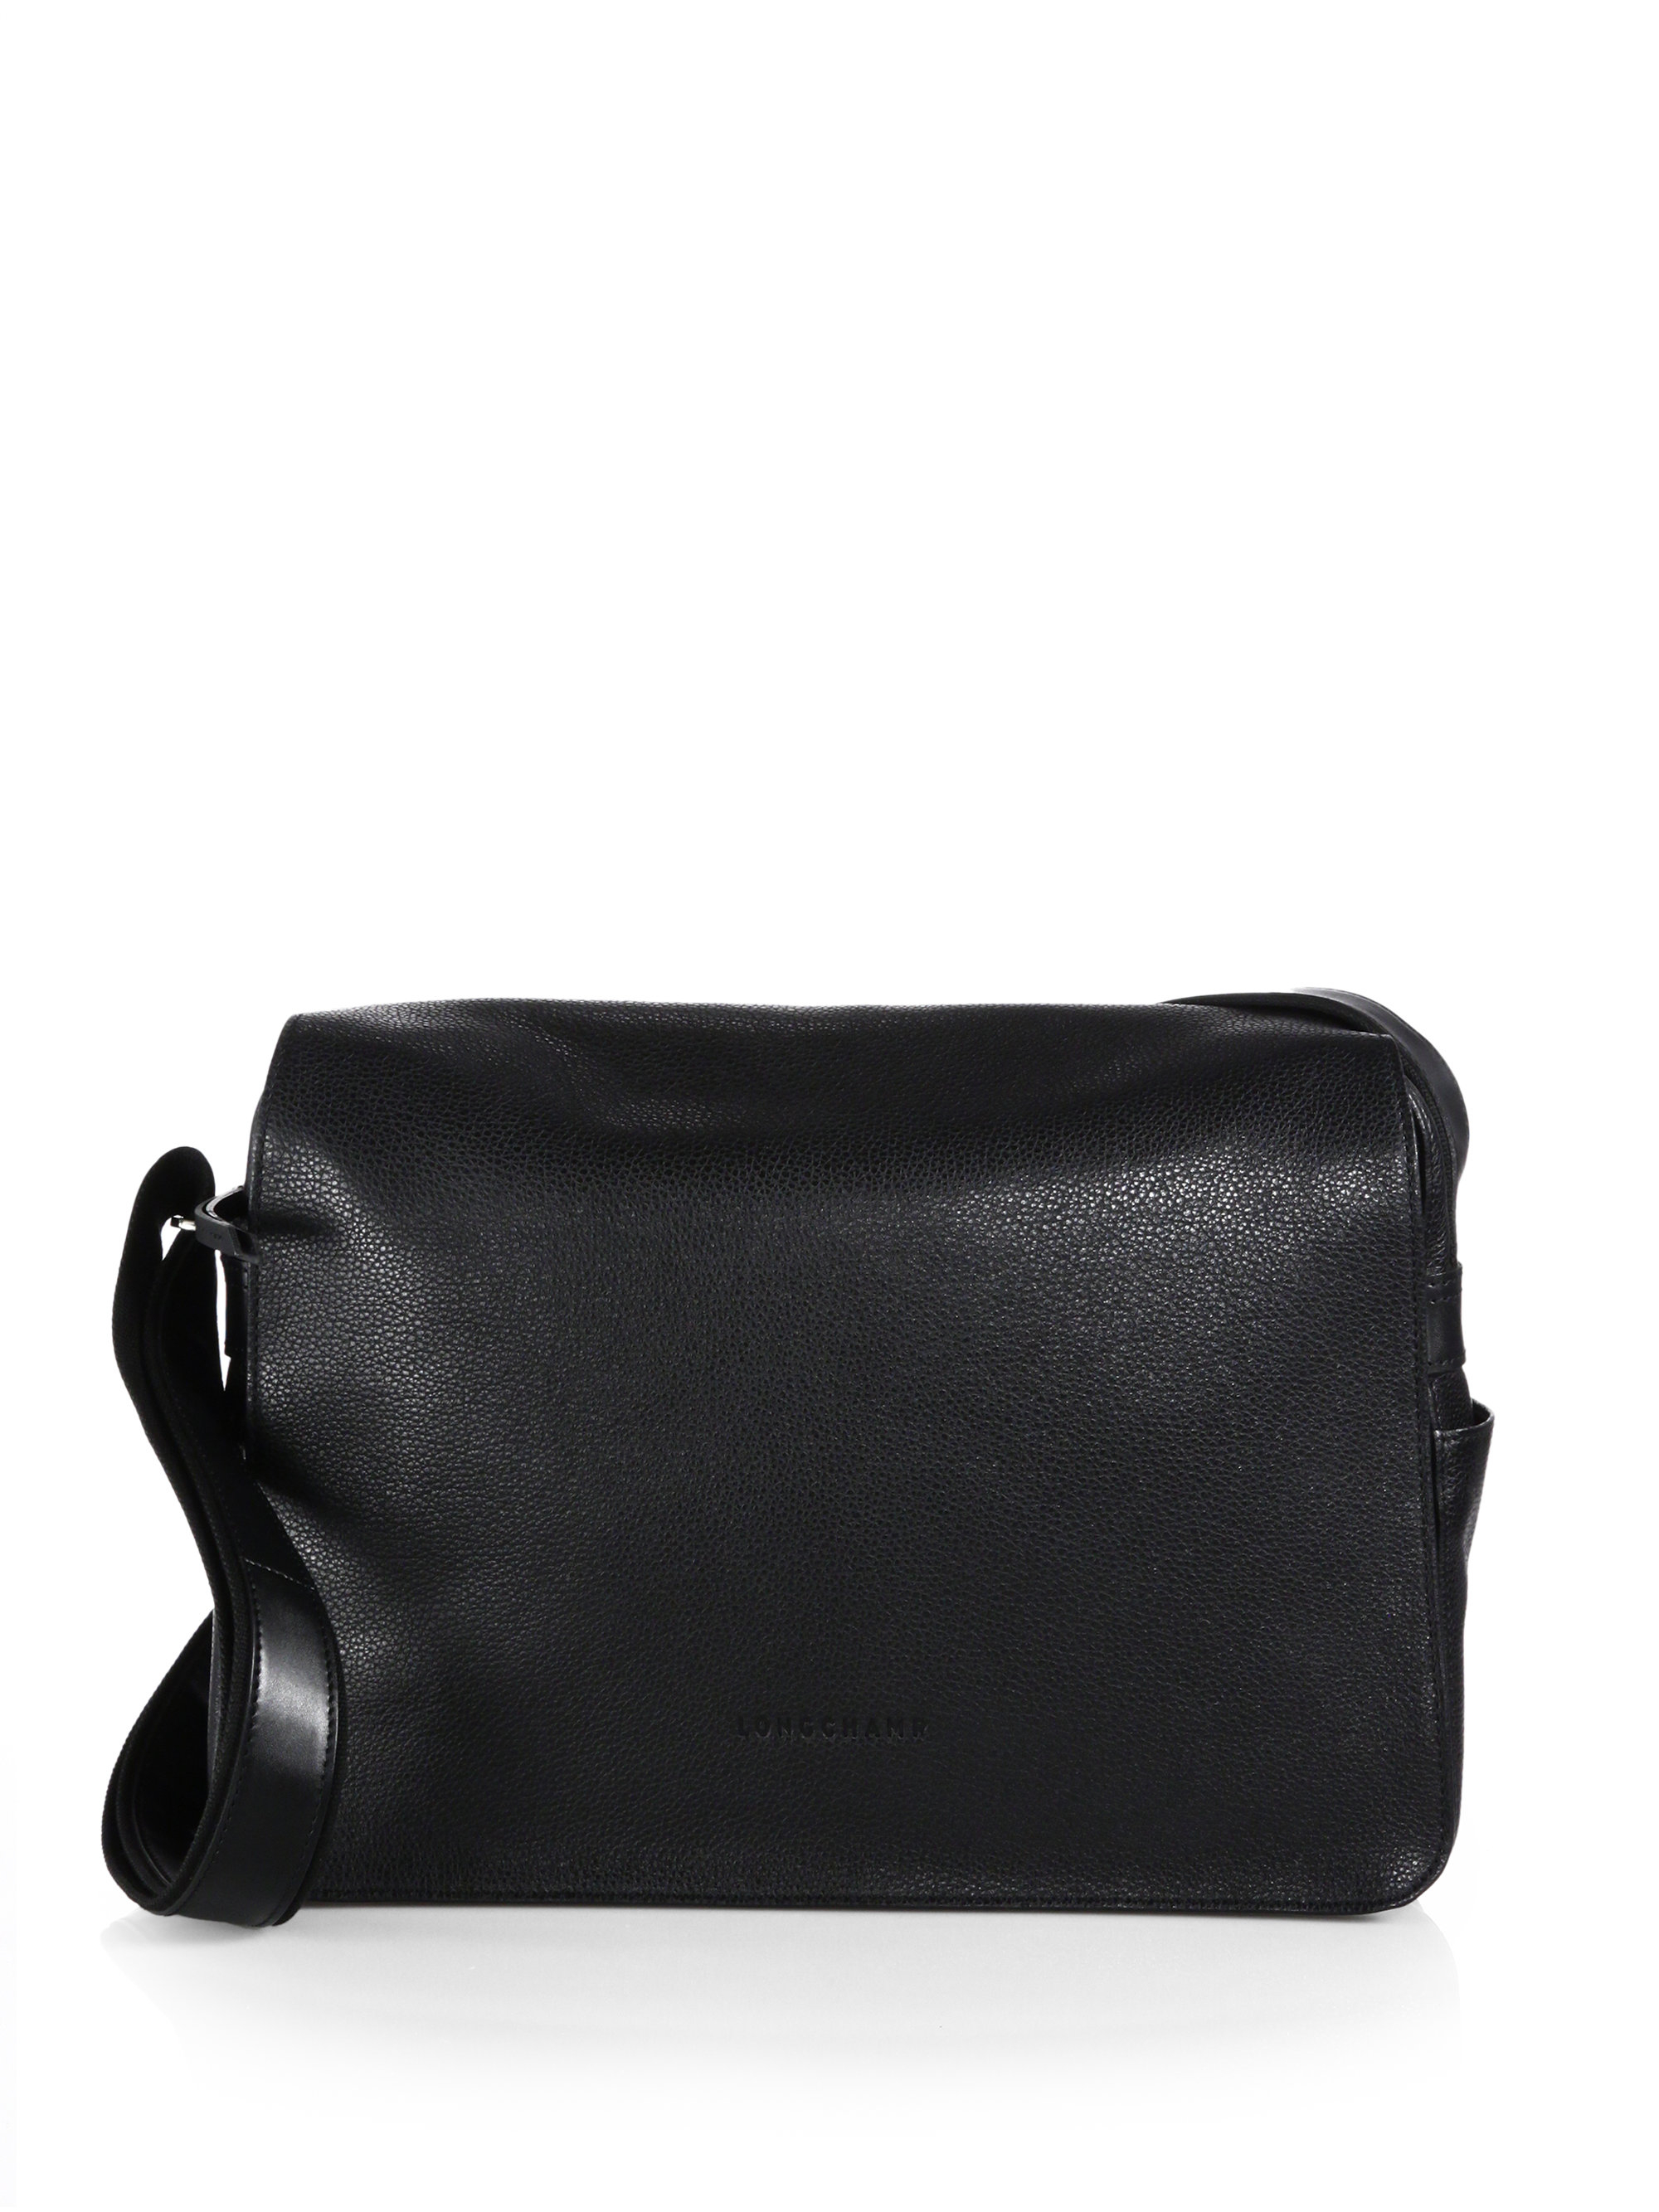 Longchamp Leather Messenger Bag in 